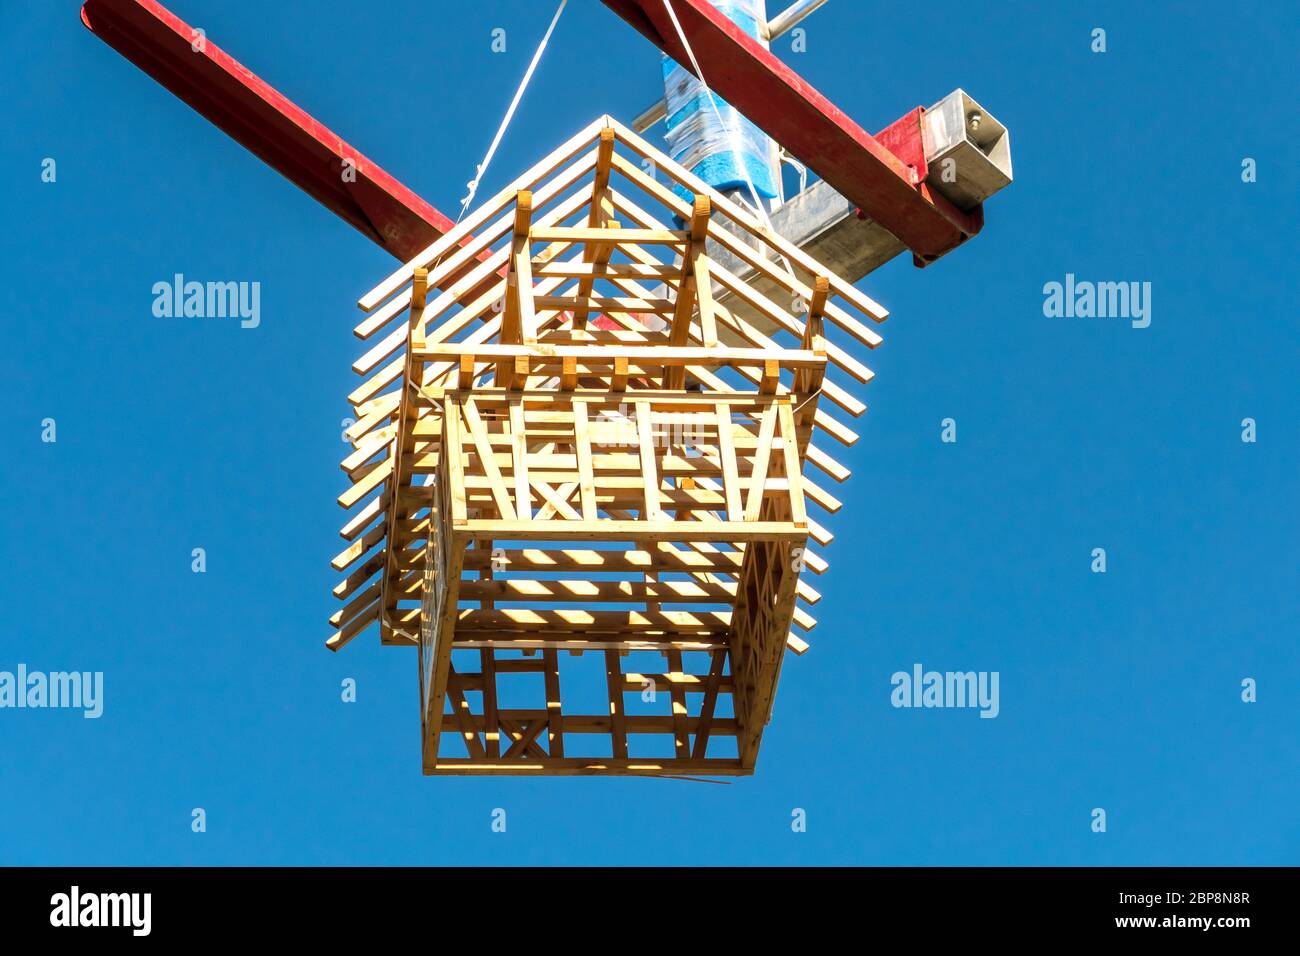 Modellhaus aus Holz vor blauem Himmel Stock Photo